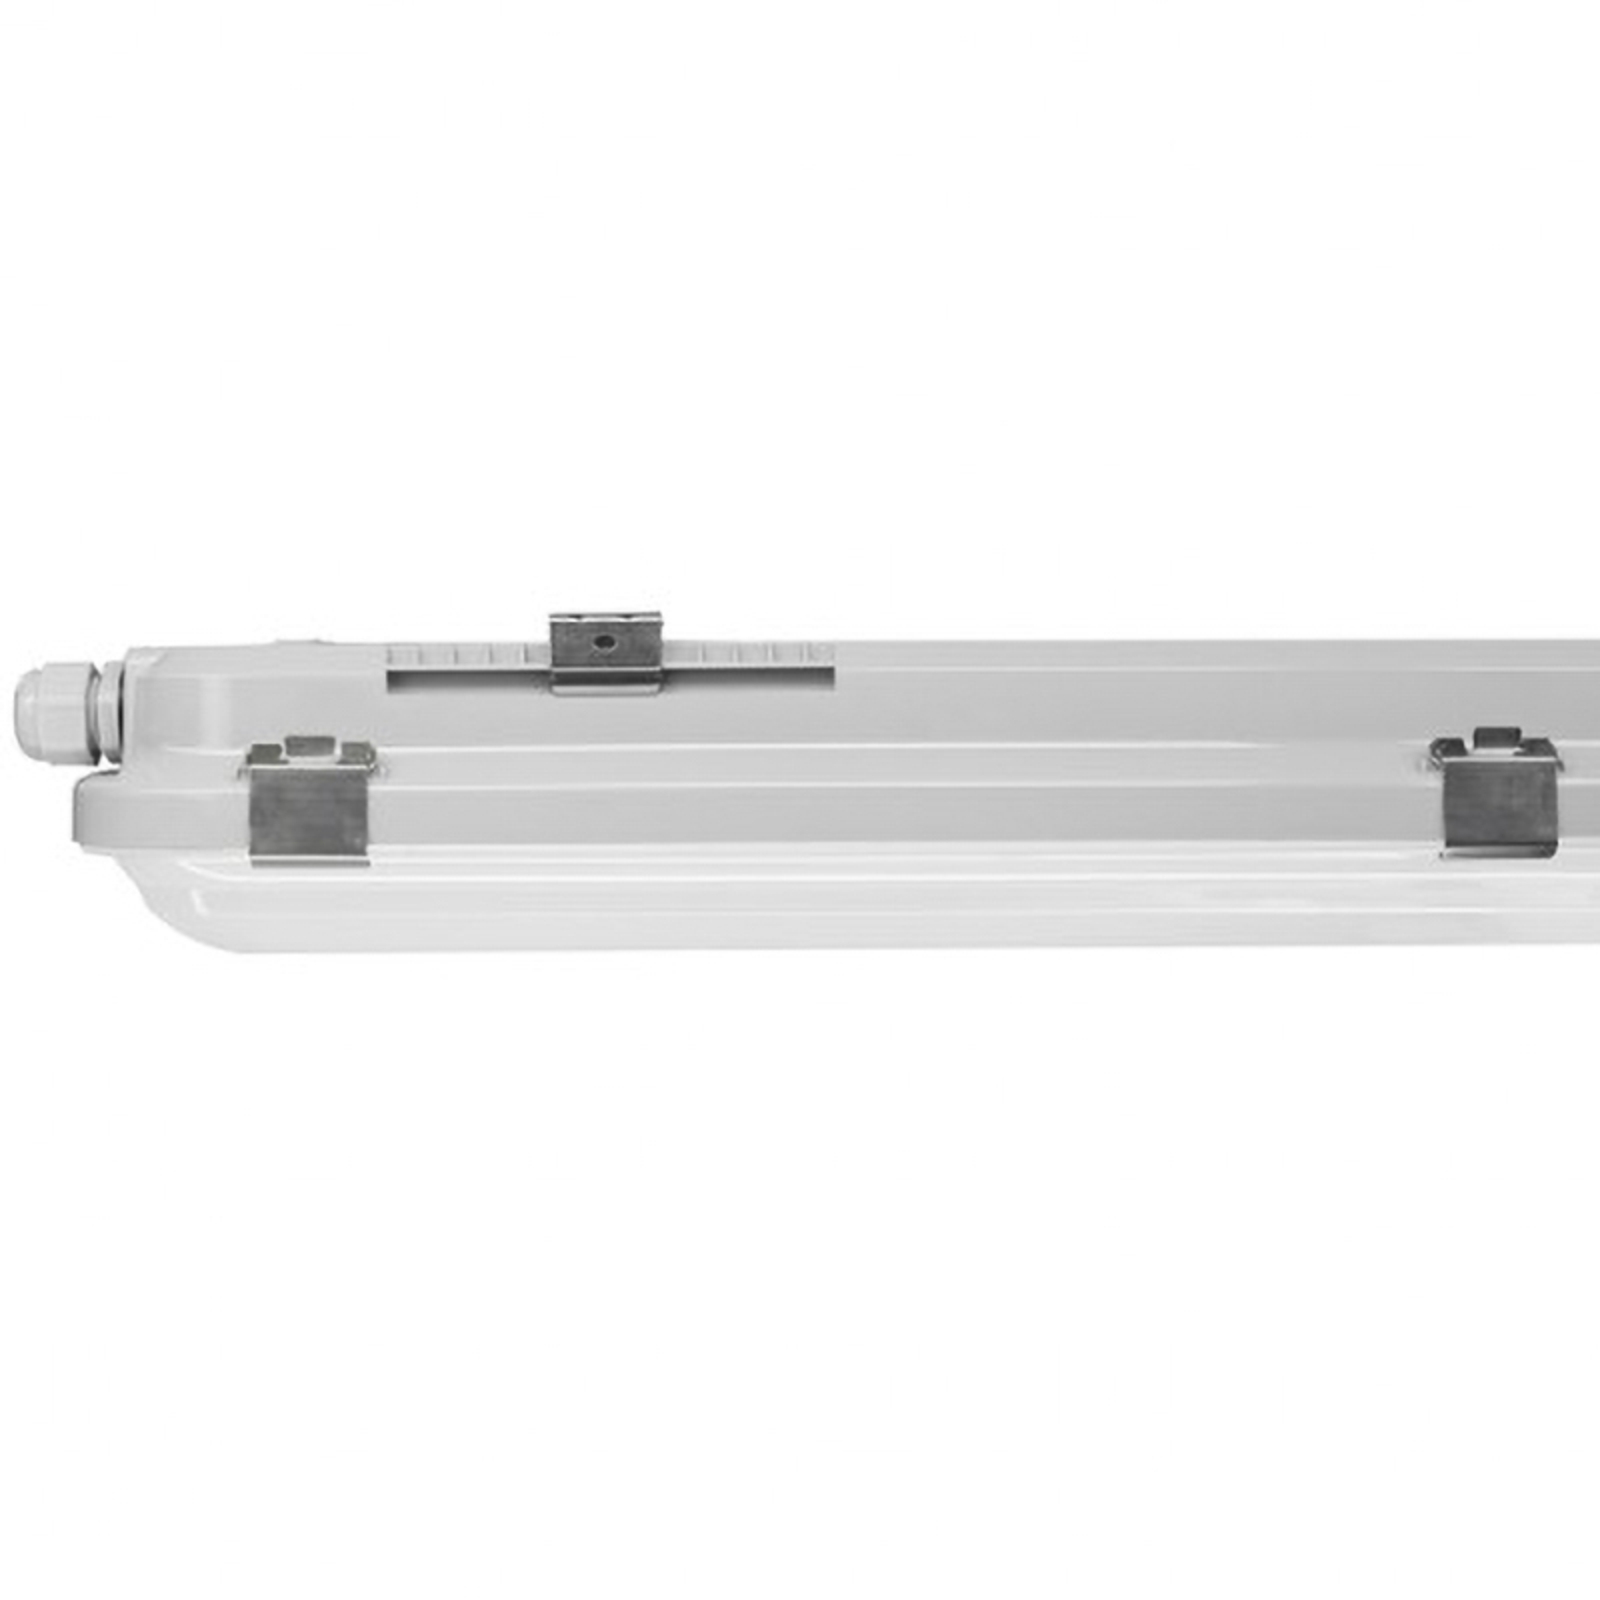 InnoGreen AQUOS 3.0 BASELine LED-lys 152cm 850